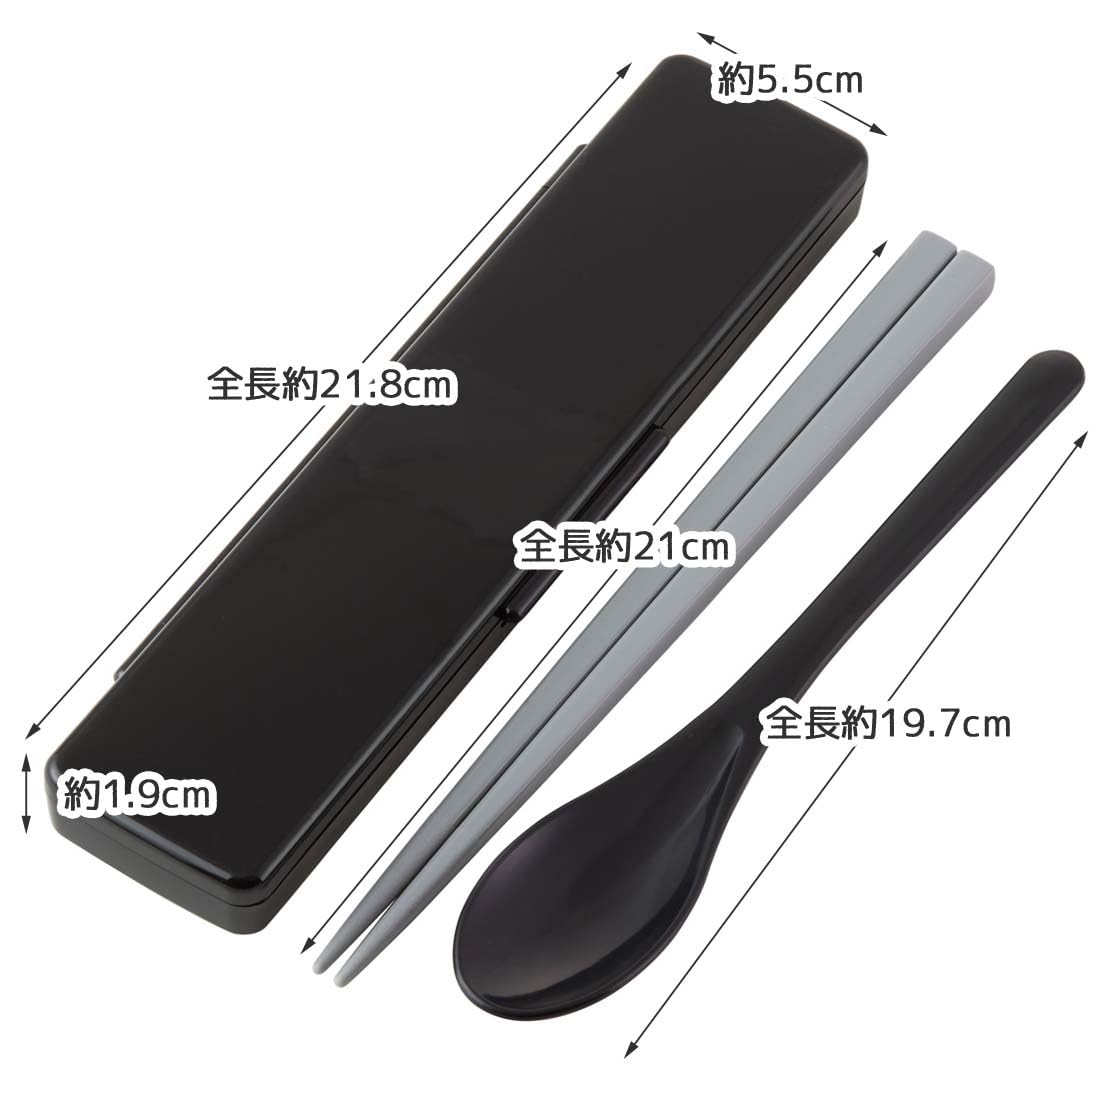 Skater 21cm Rich Black Antibacterial Chopsticks & Spoon Set CCS45SAAG-A